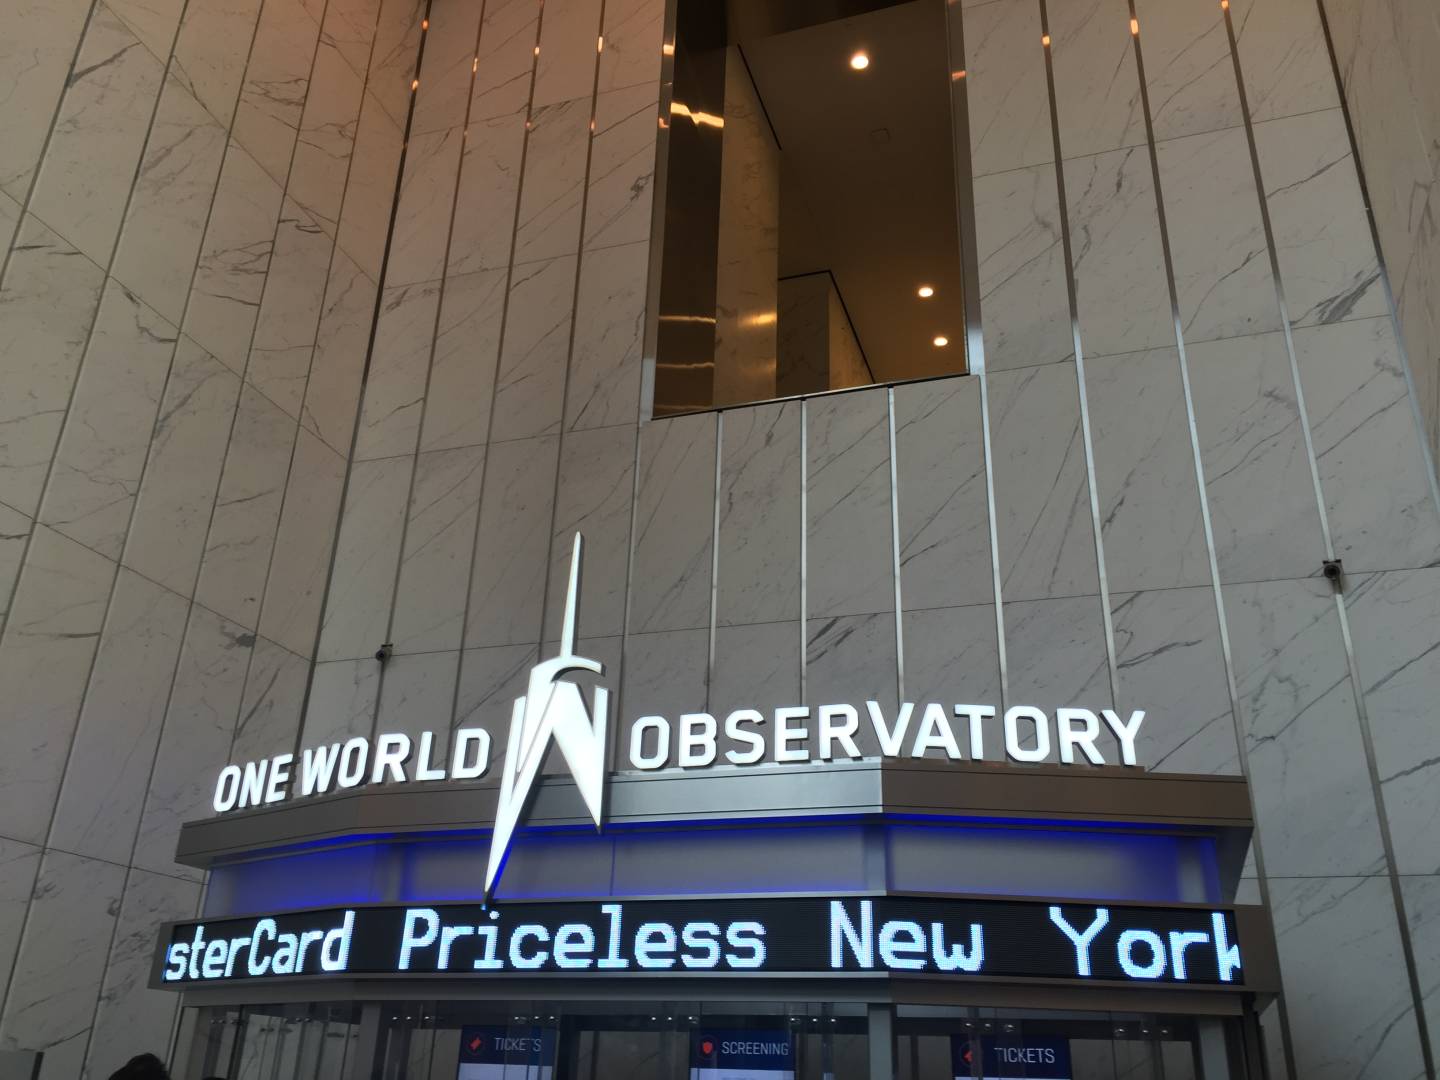 One World Observatory